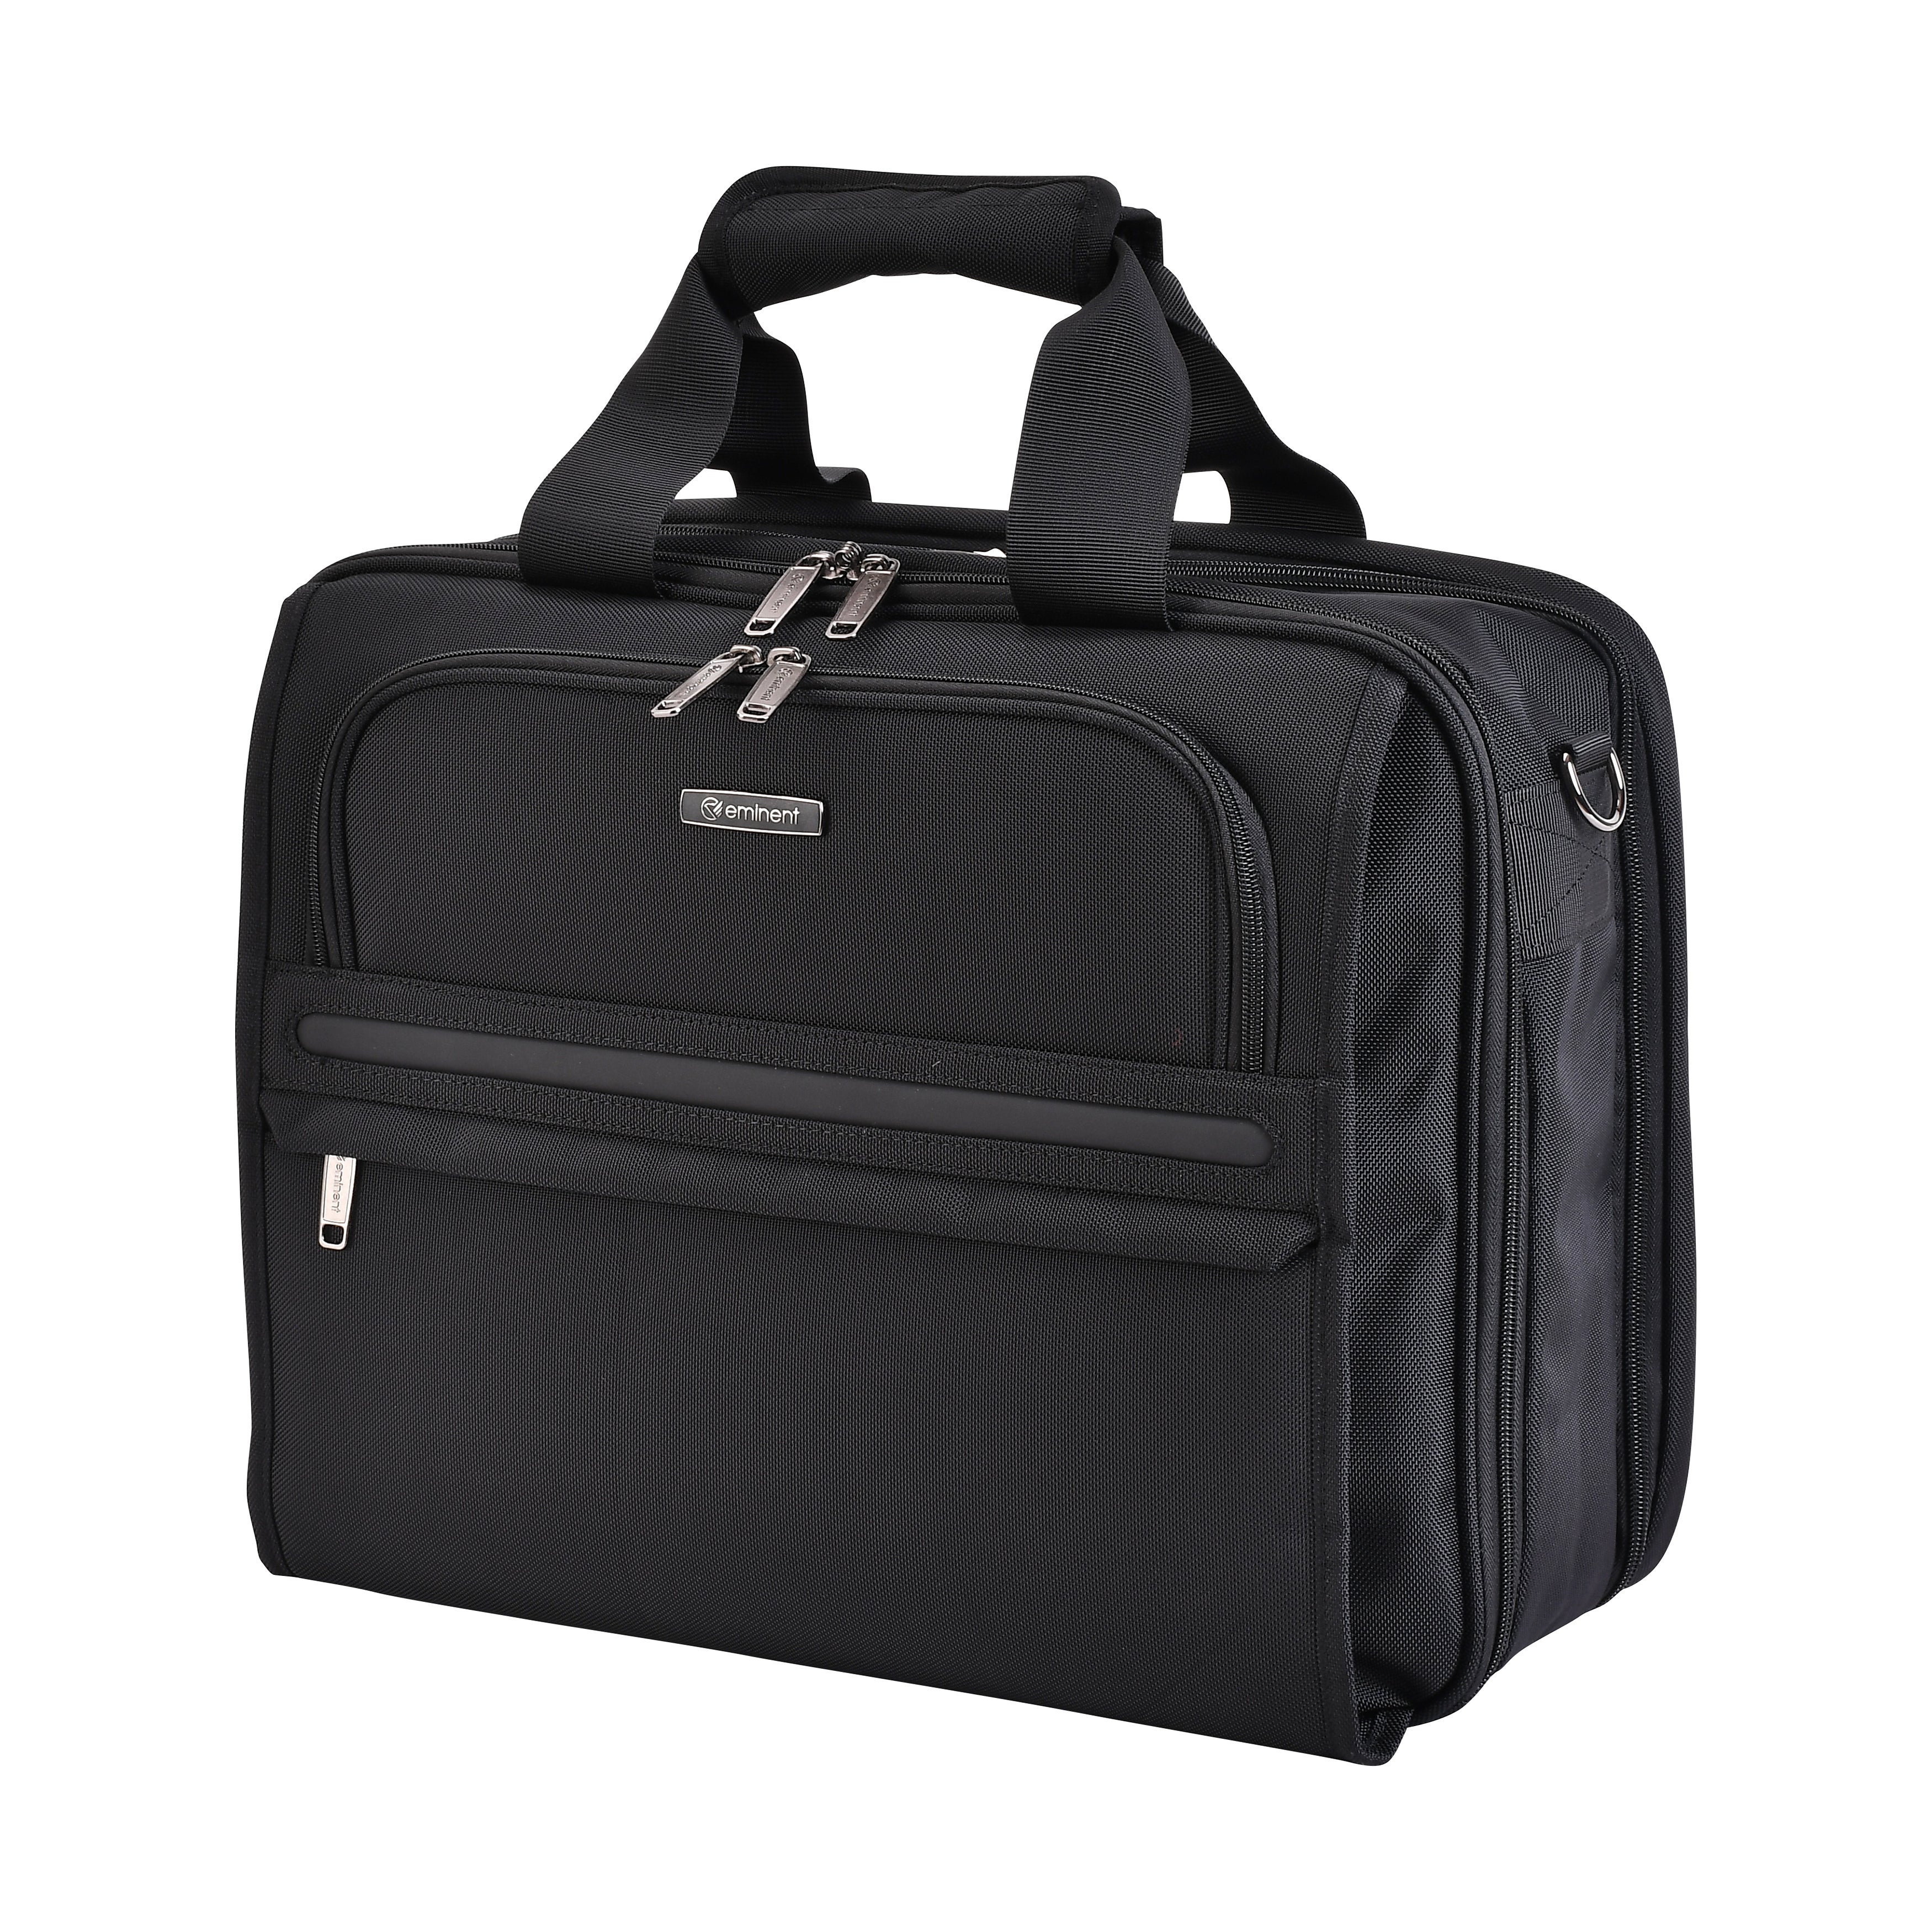 Eminent Premium 17inch Shoulder Business Laptop Bag Polyester Light Weight 180° Opening Business Laptop Case for Men Women on Travel Business, V322-17